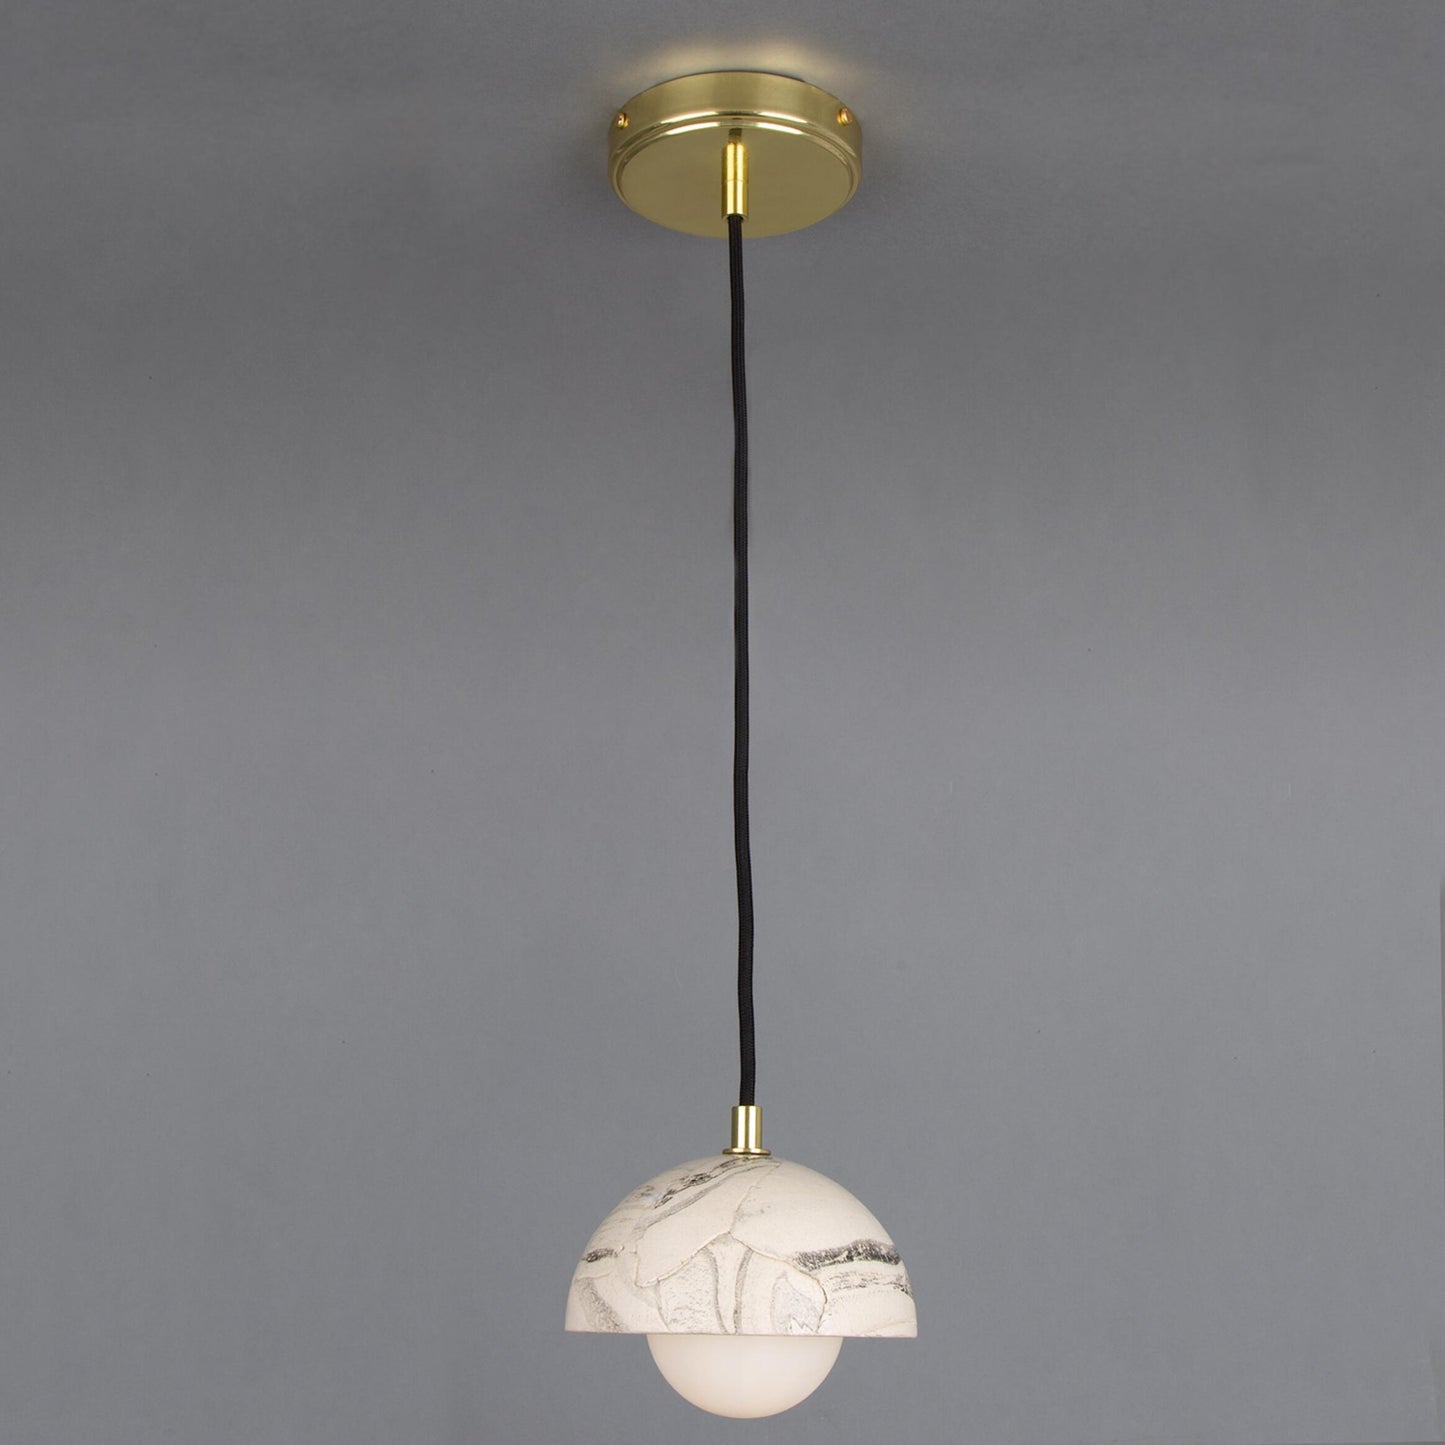 Ferox Small Marbled Ceramic Dome Pendant Light 14cm, packshot